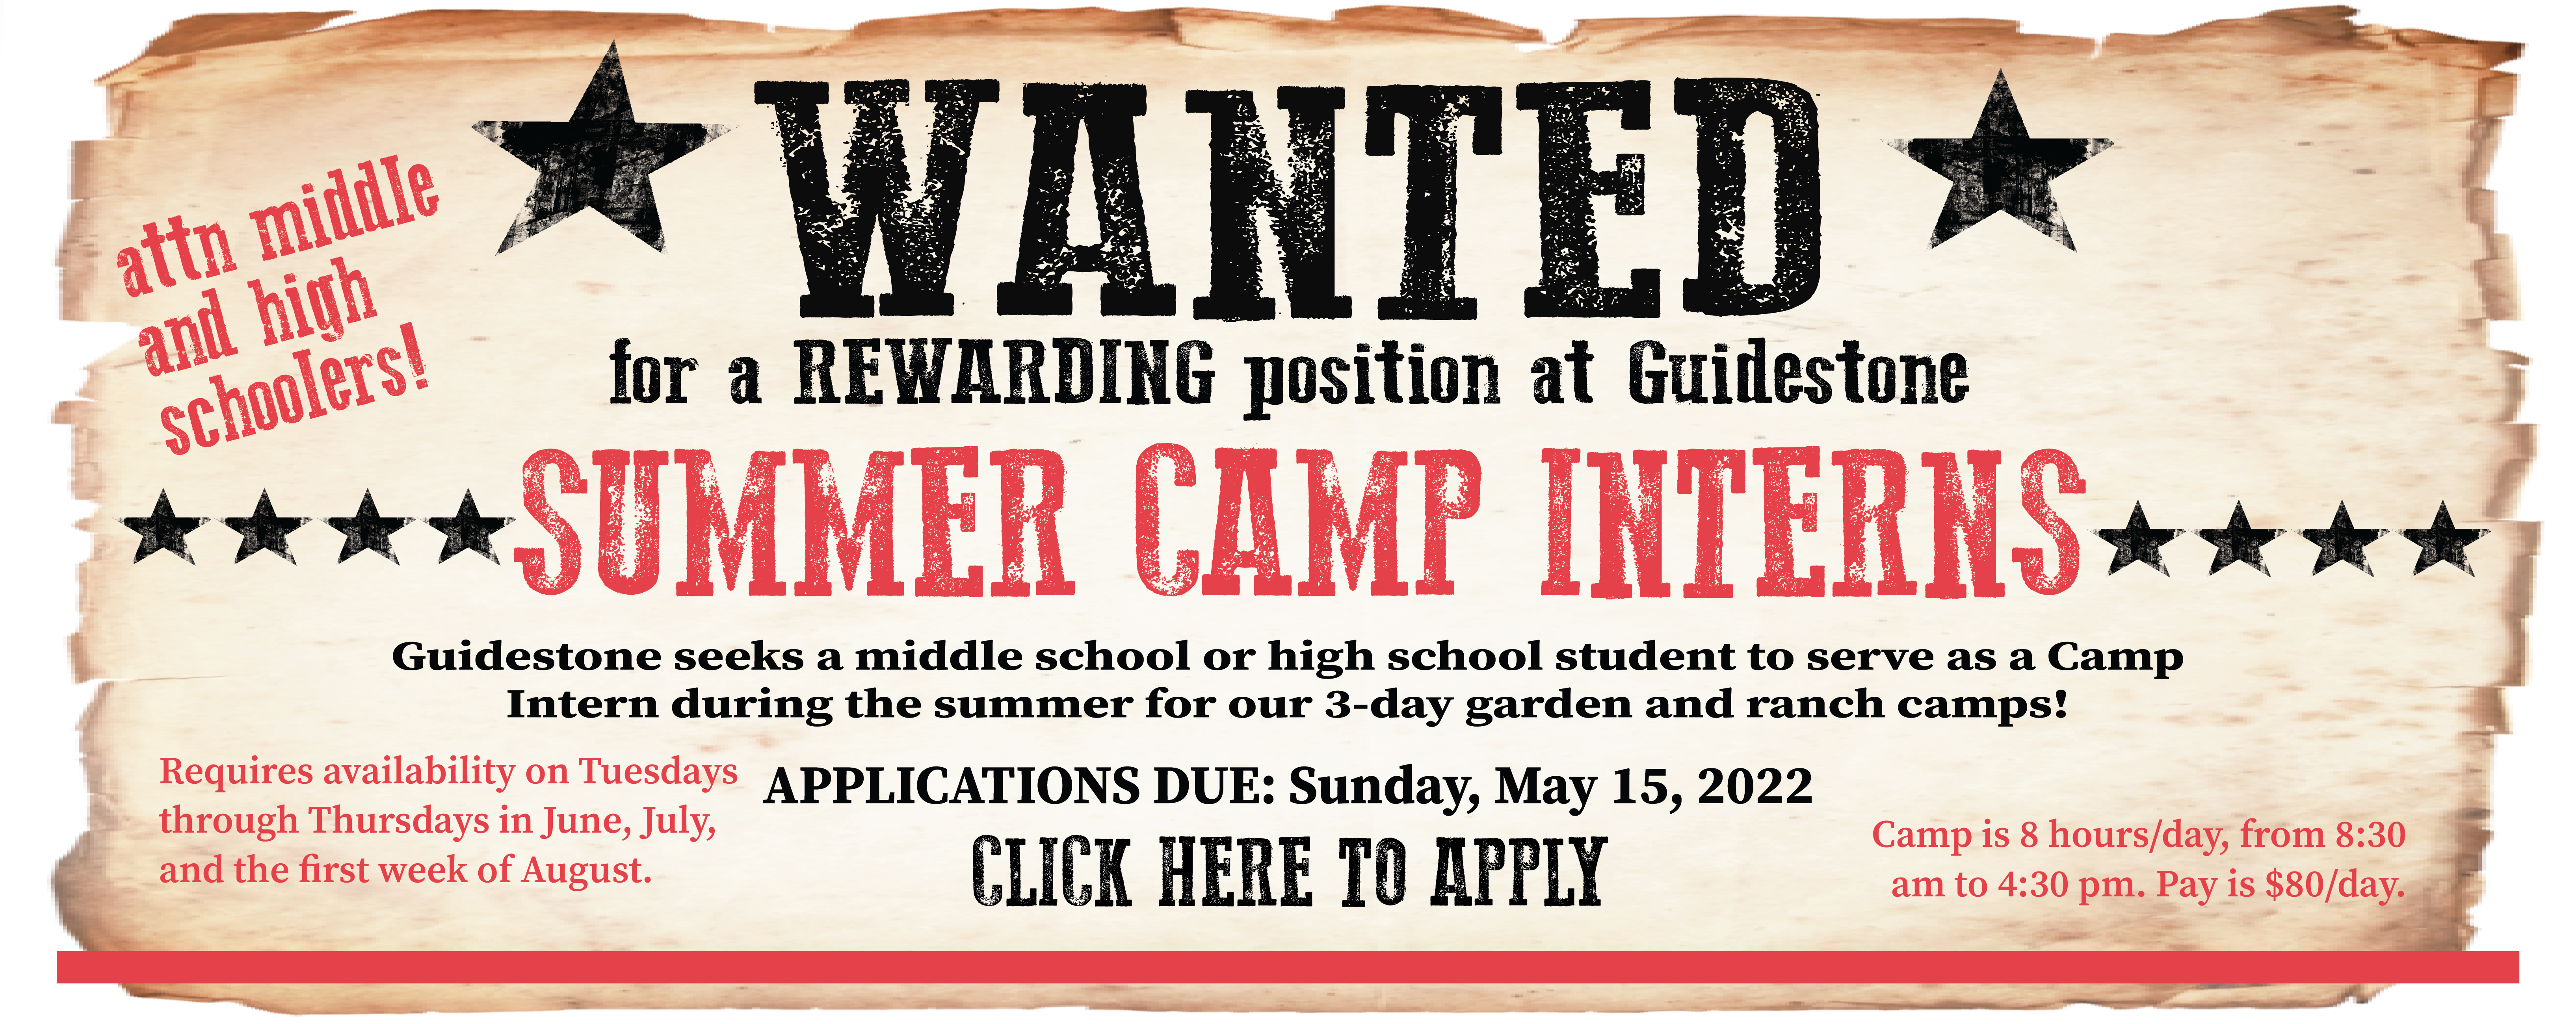 Wanted! Summer Camp Interns!